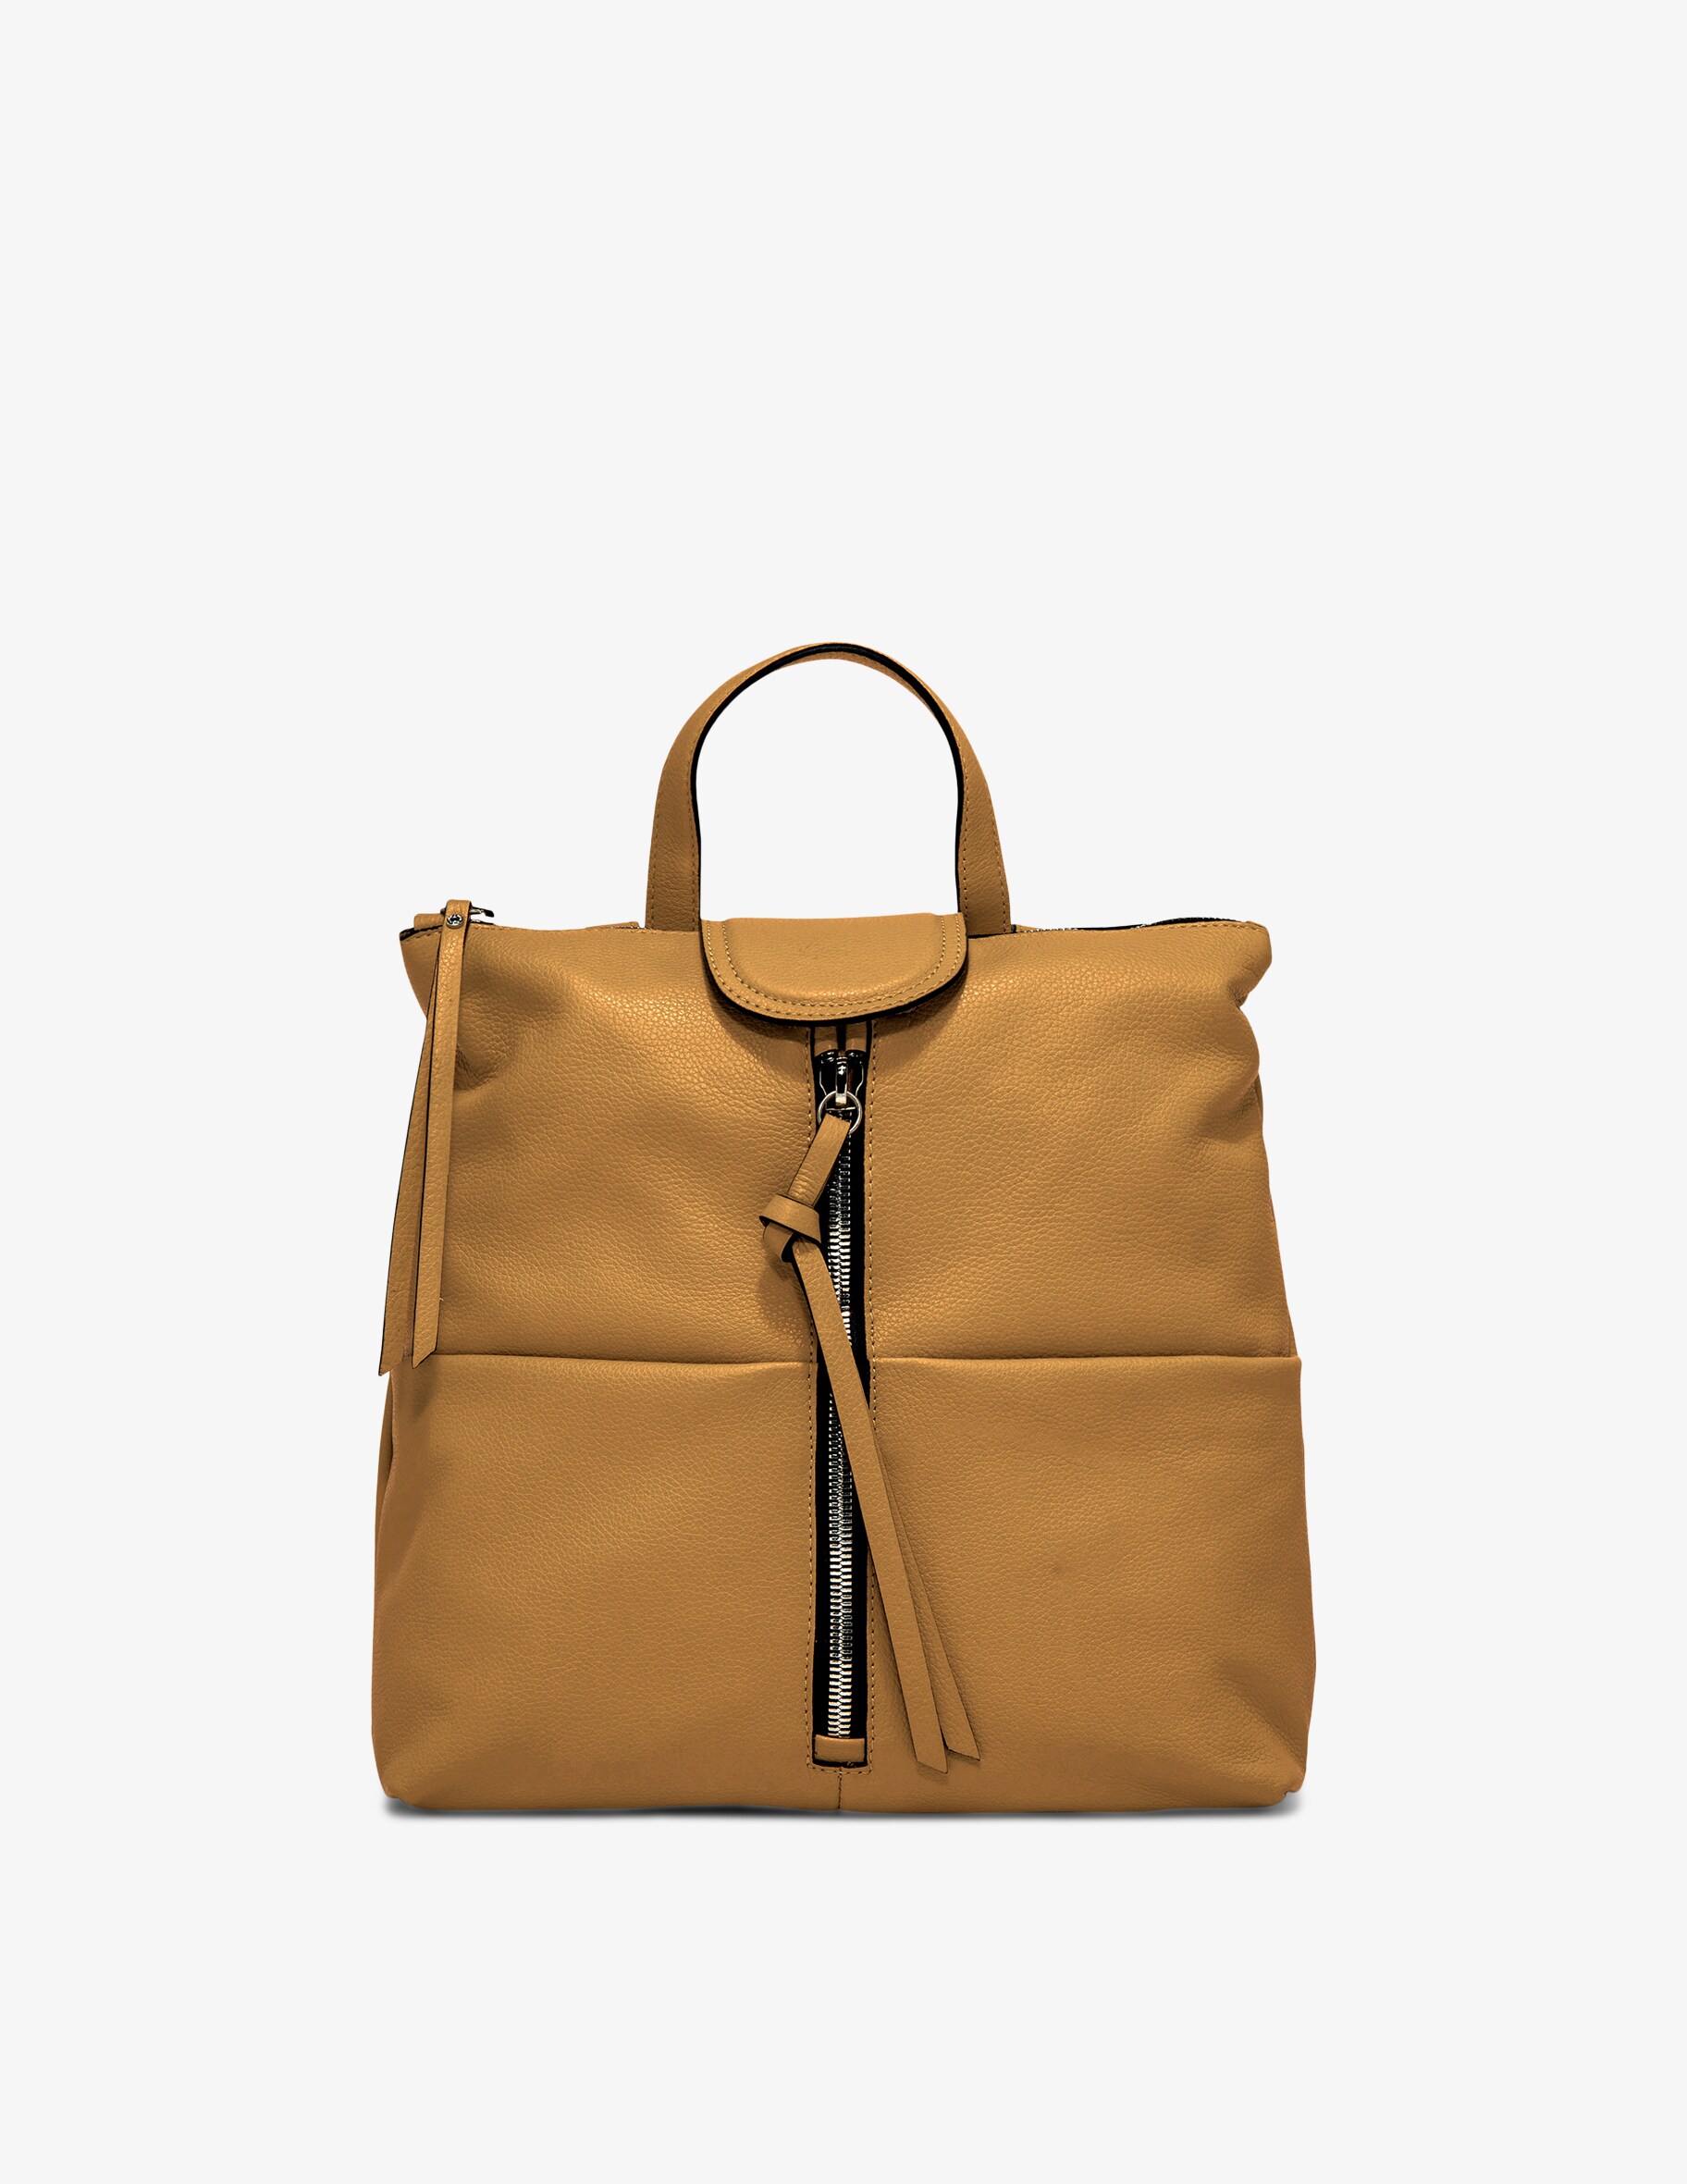 Рюкзак Giada Gianni Chiarini Firenze, коричневый сумка superlight gianni chiarini цвет natural